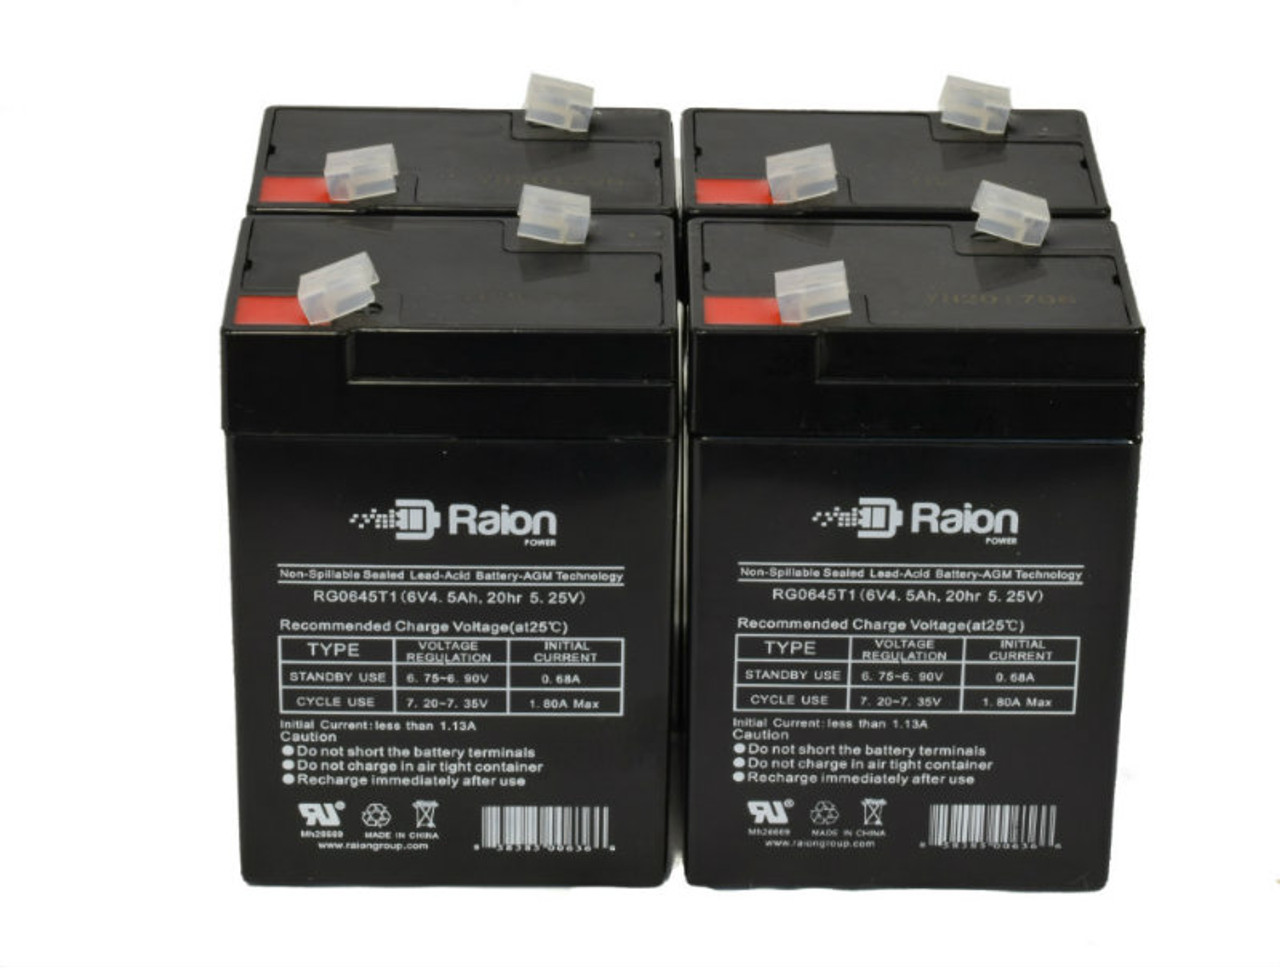 Raion Power 6V 4.5Ah Replacement Emergency Light Battery for Dual-Lite SL1 -V - 4 Pack